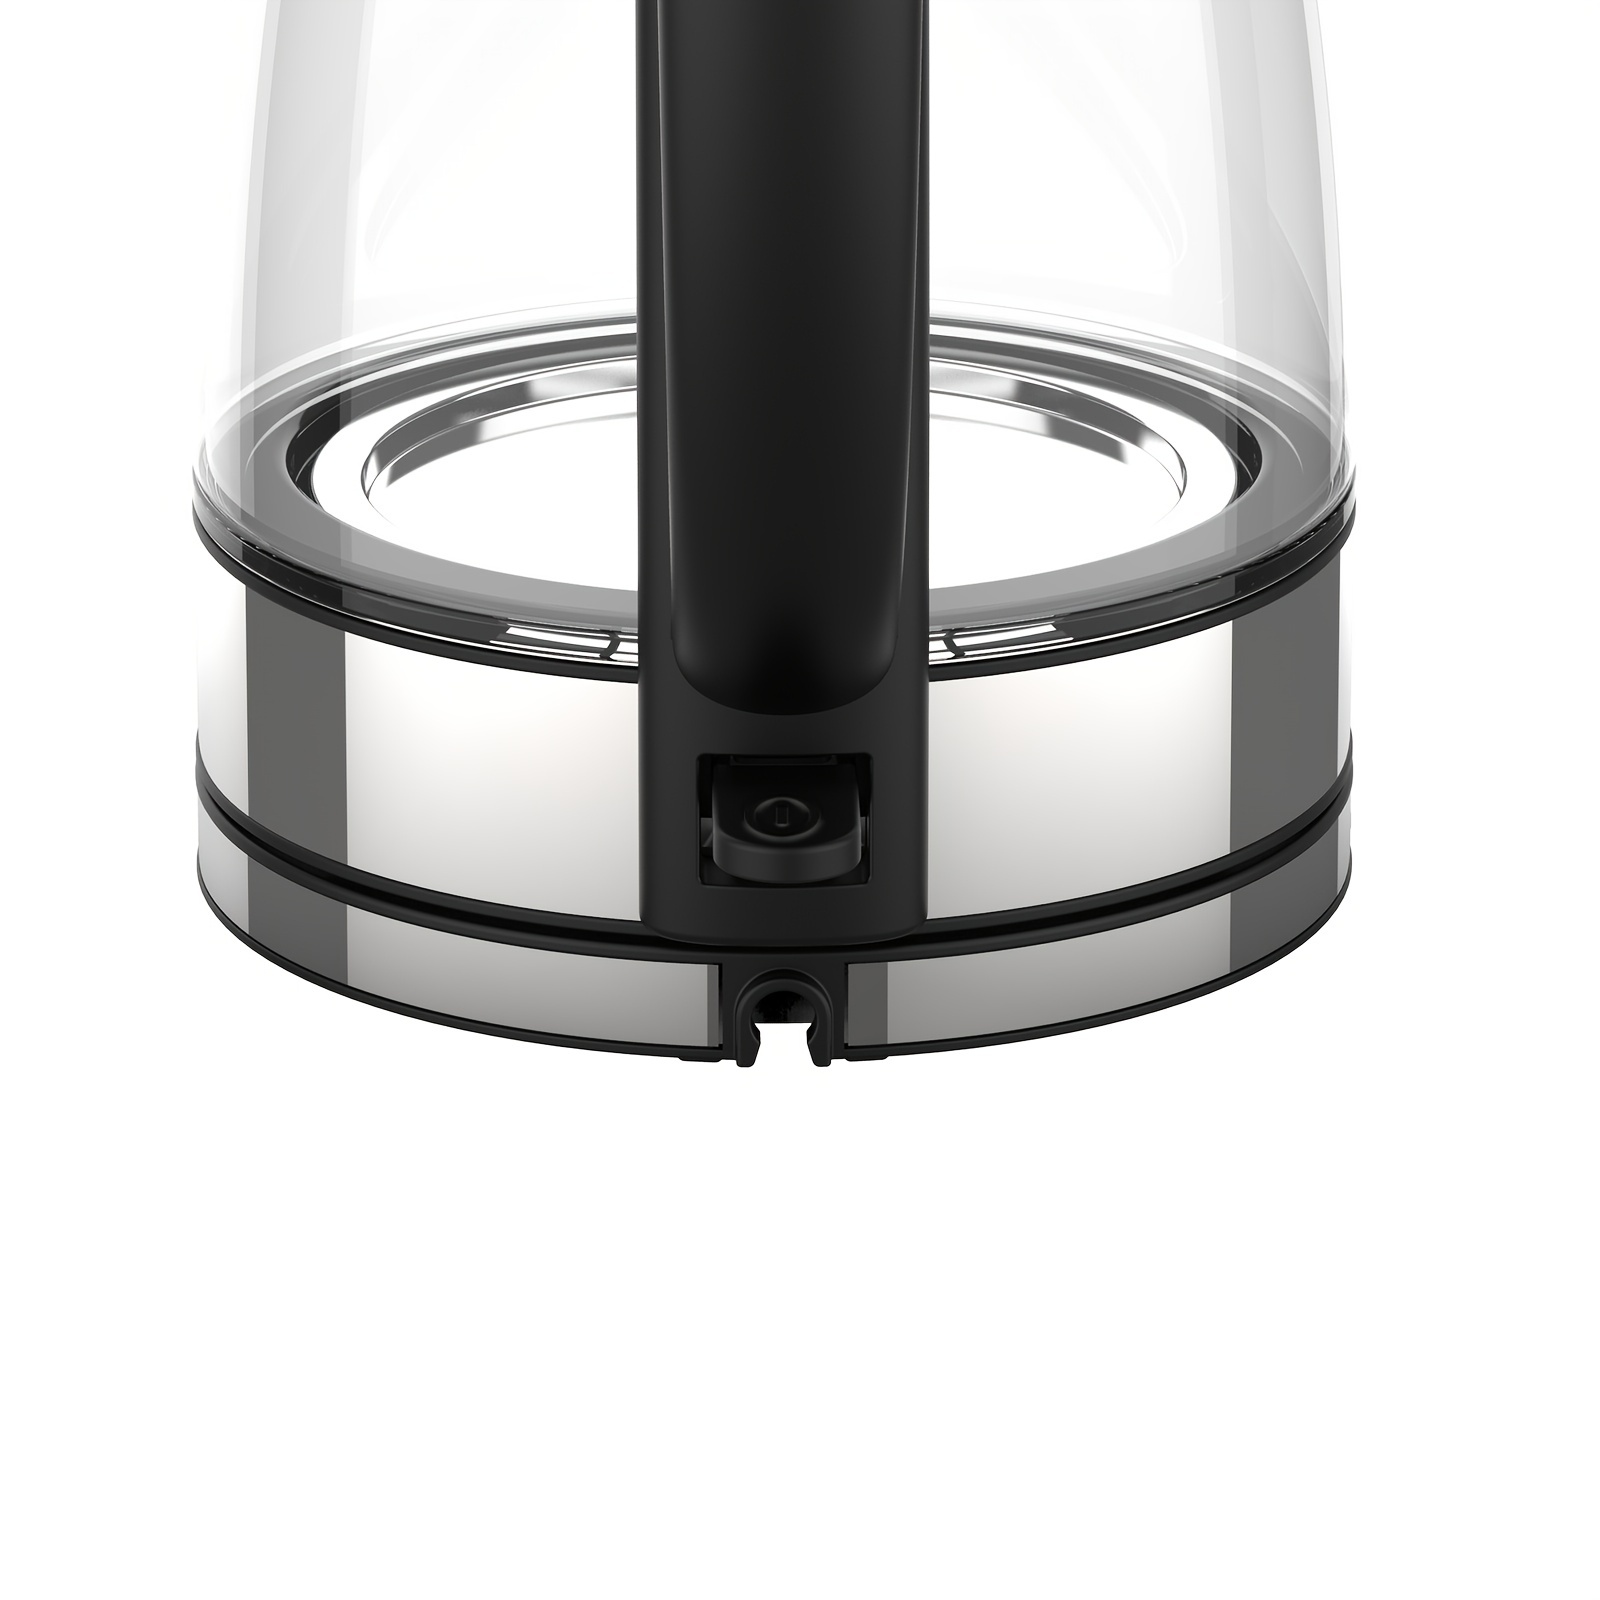 Evoloop Electric Tea Kettle 1.7L Hot Water Boiler, 1500W Glass